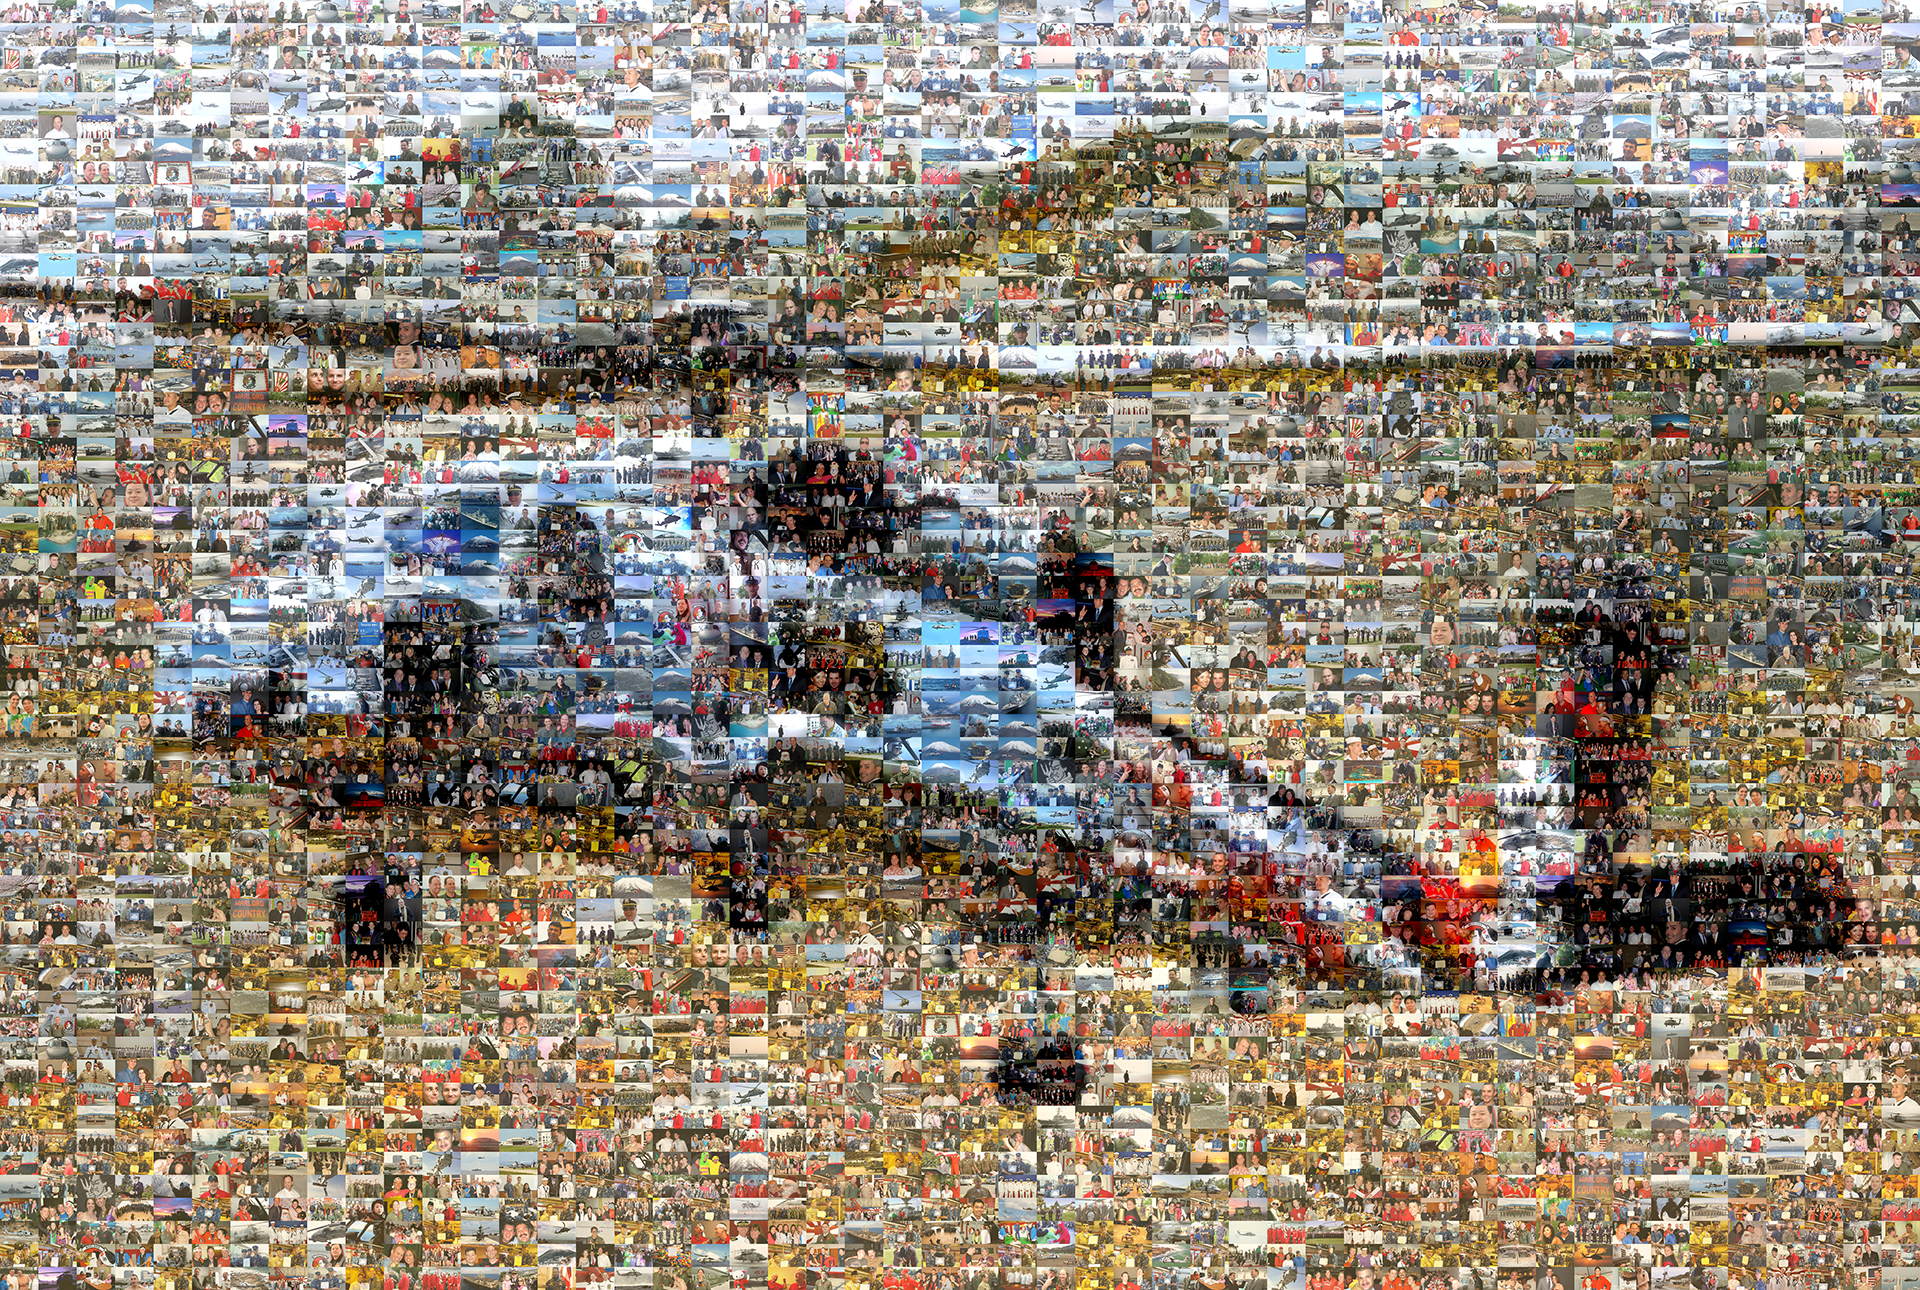 photo mosaic created using 786 custom photos